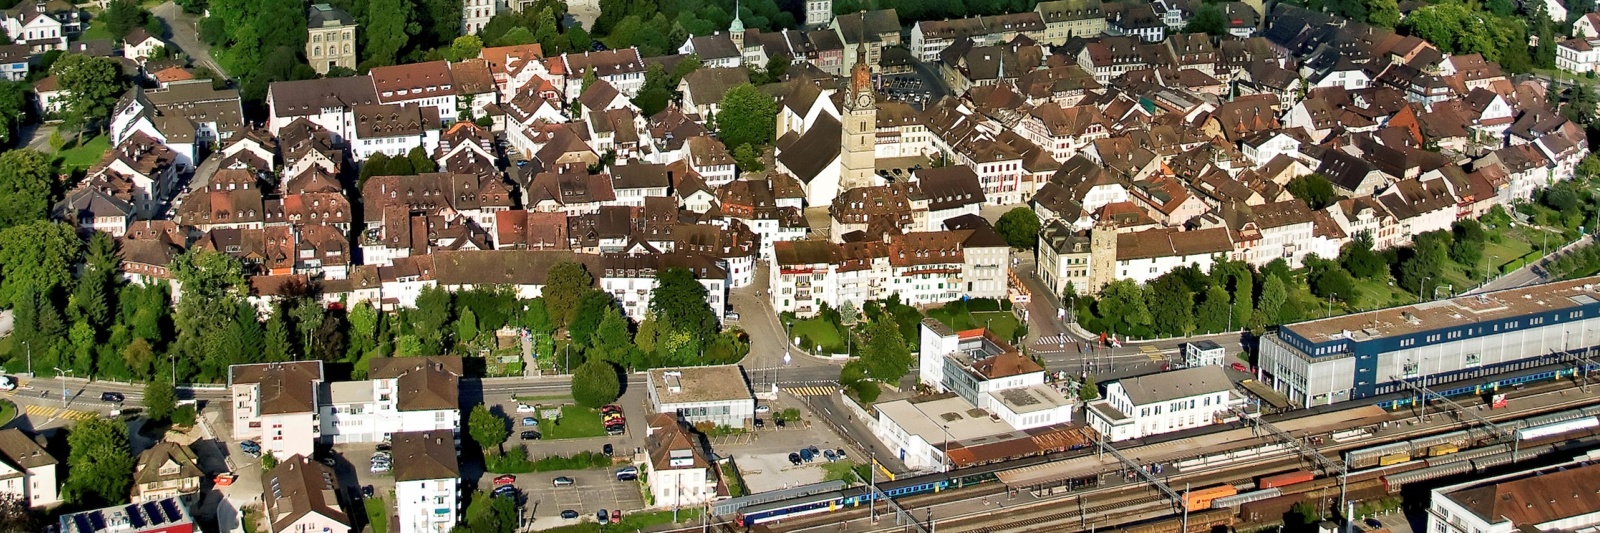 Raiffeisenbank Region Zofingen